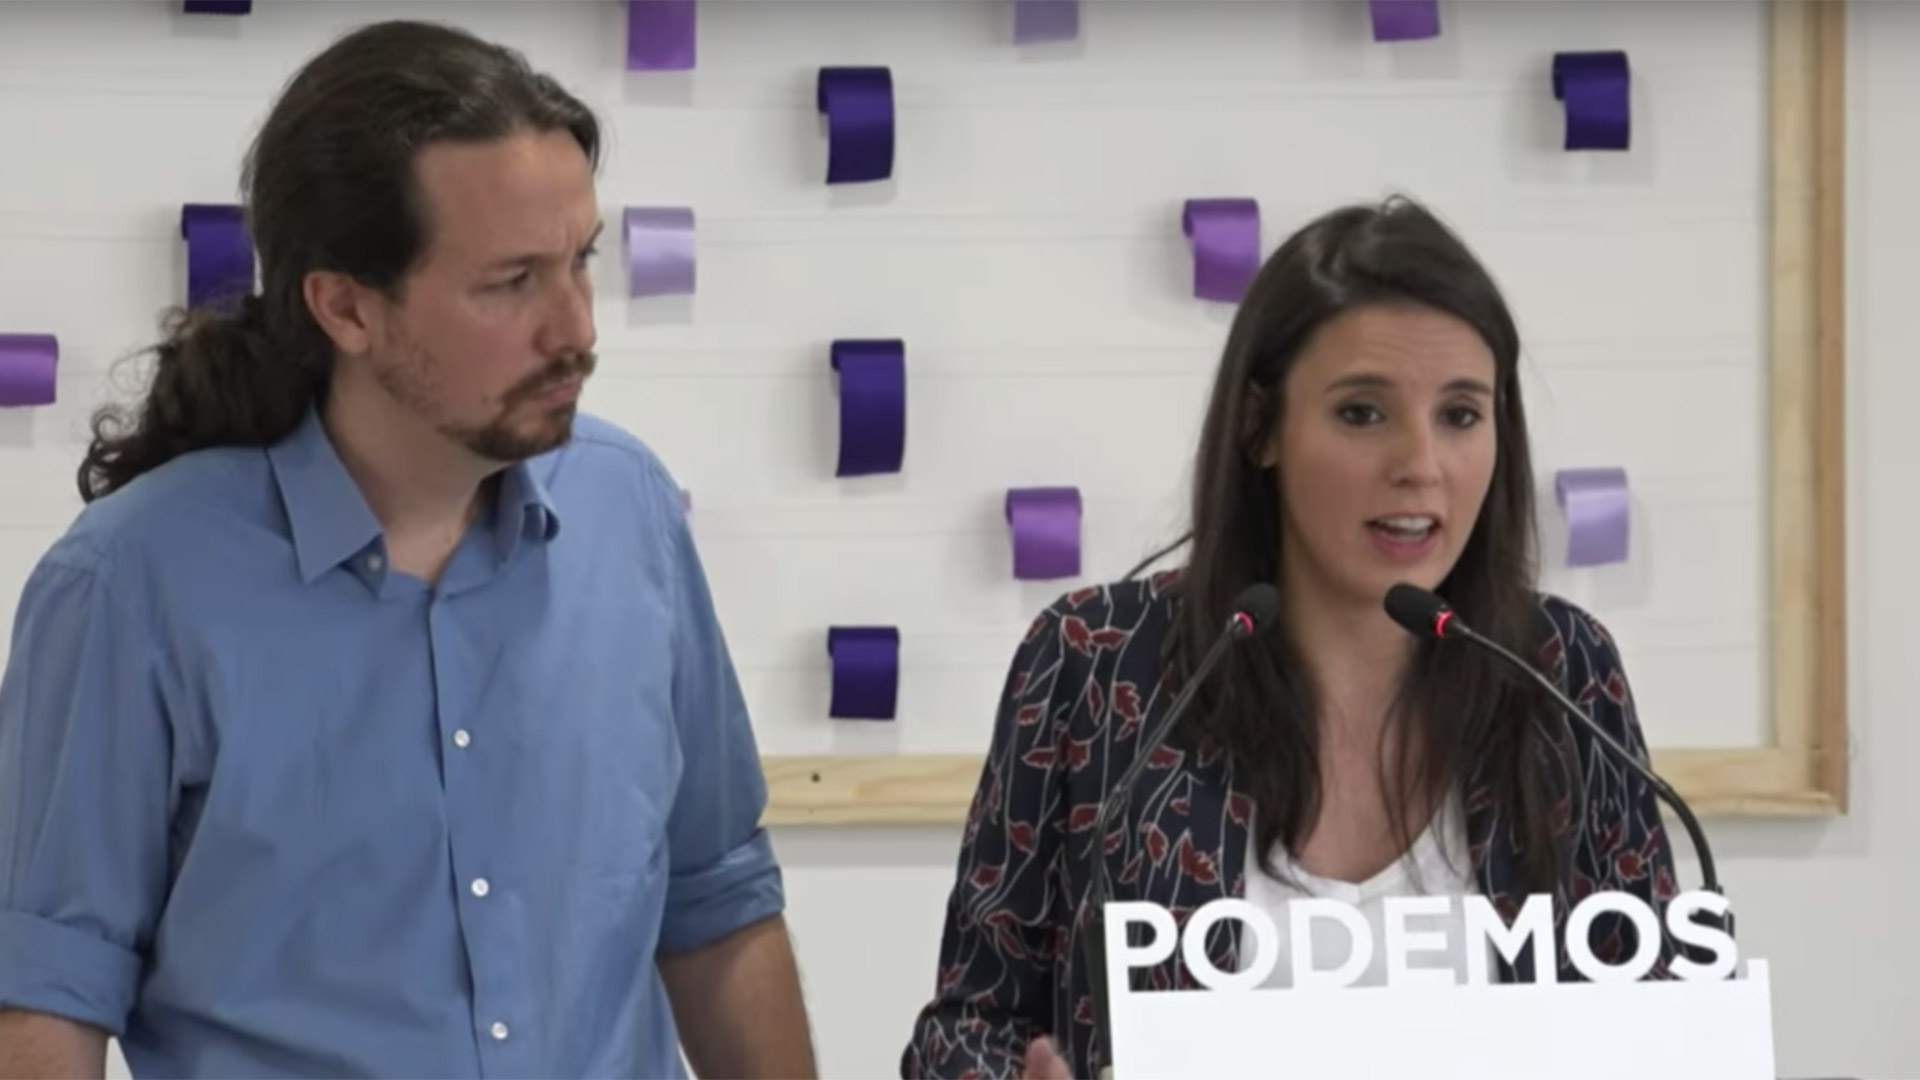 Las bases de Podemos votarán desde mañana si Iglesias y Montero deben dimitir